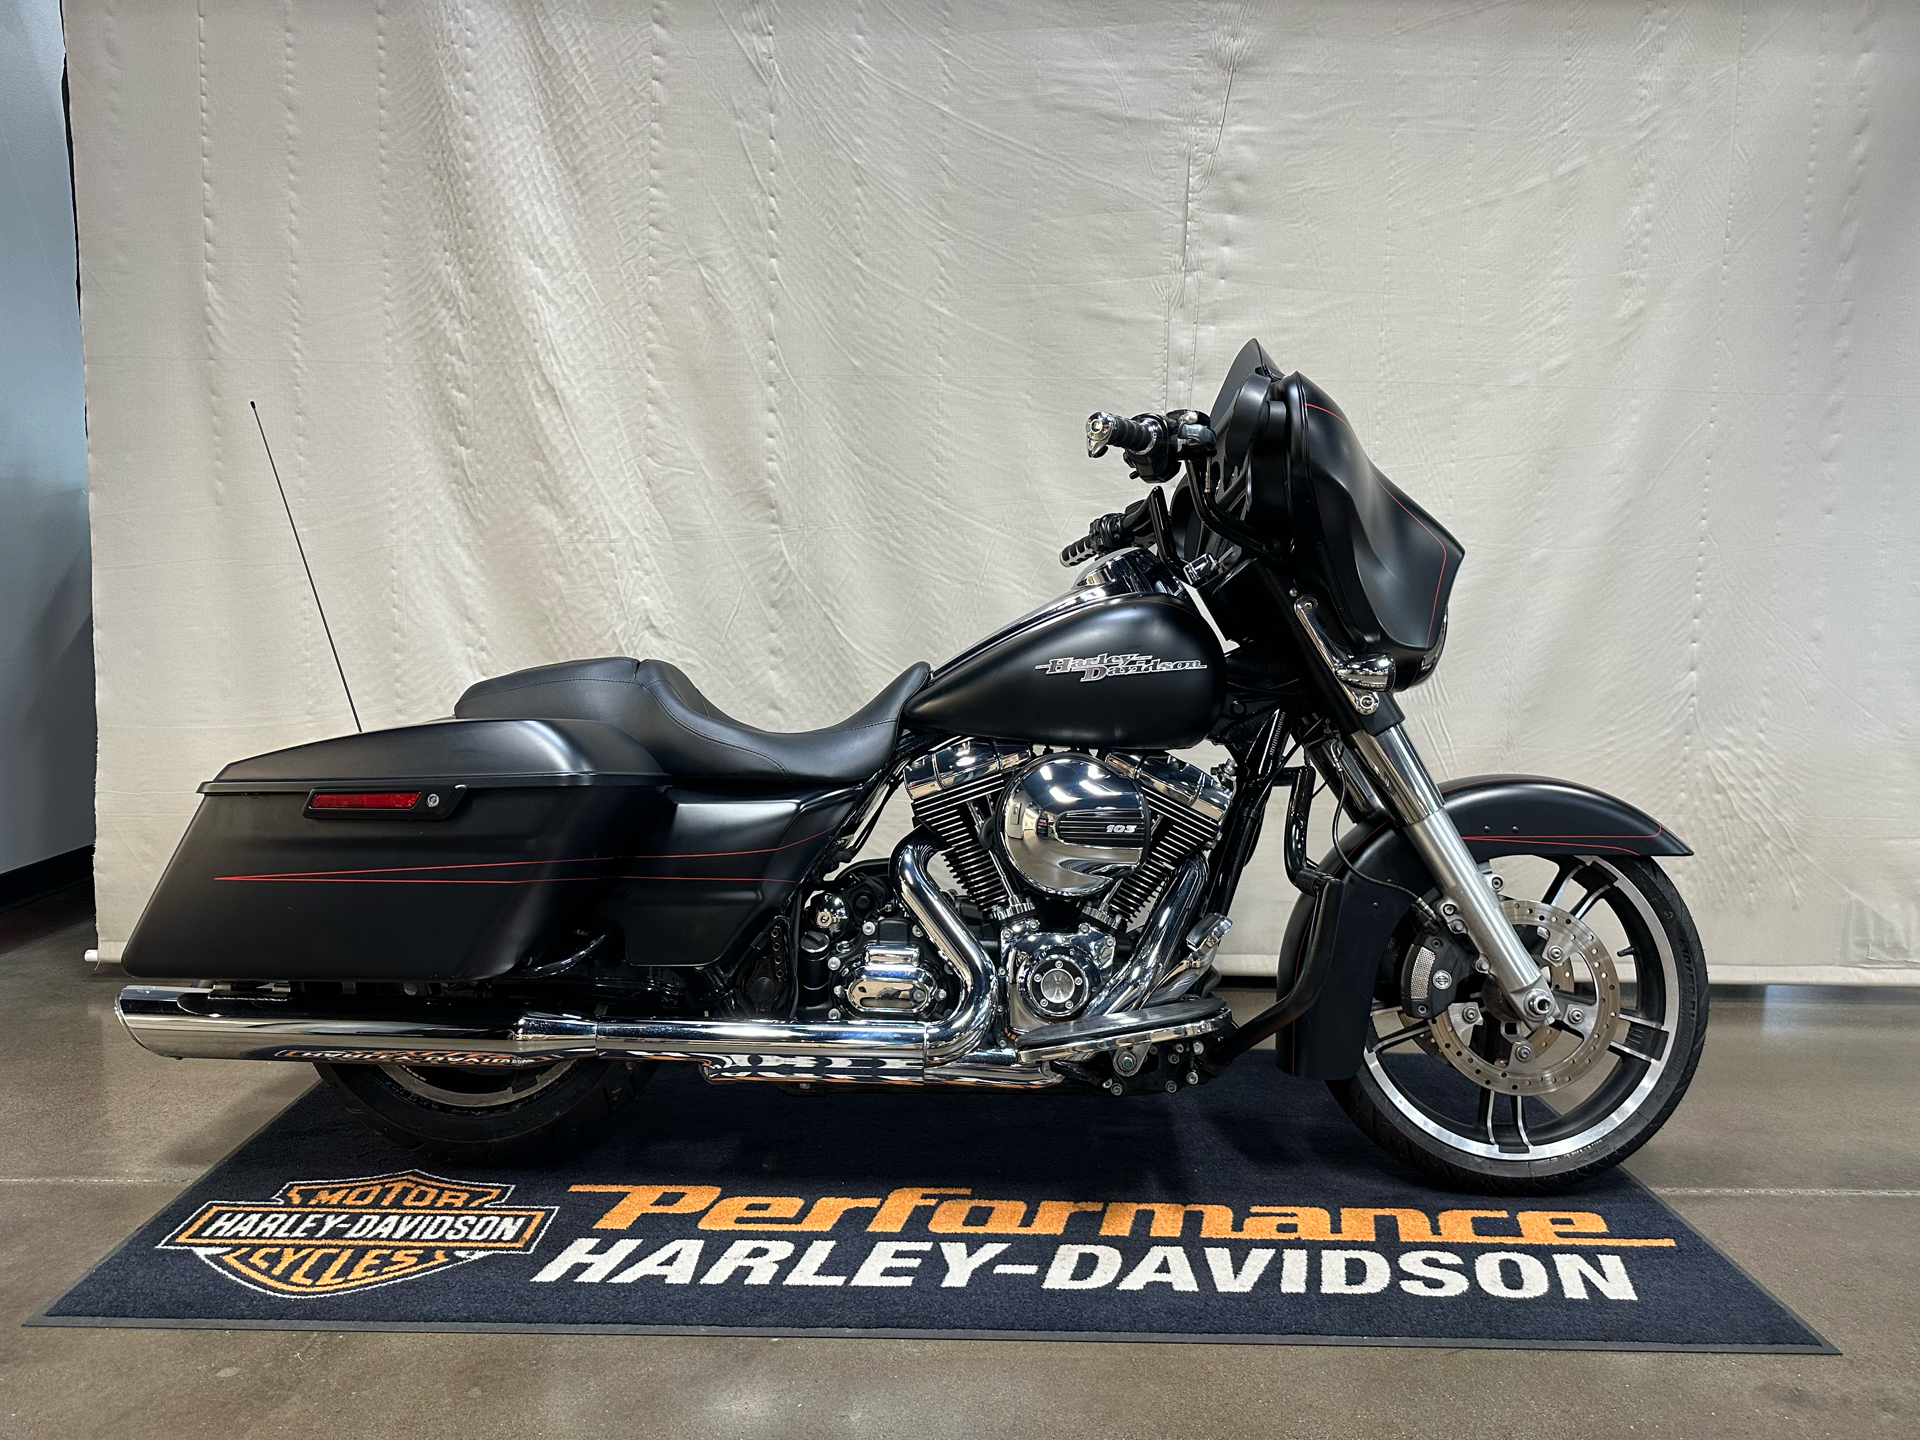 2016 Harley-Davidson Street Glide® Special in Syracuse, New York - Photo 1